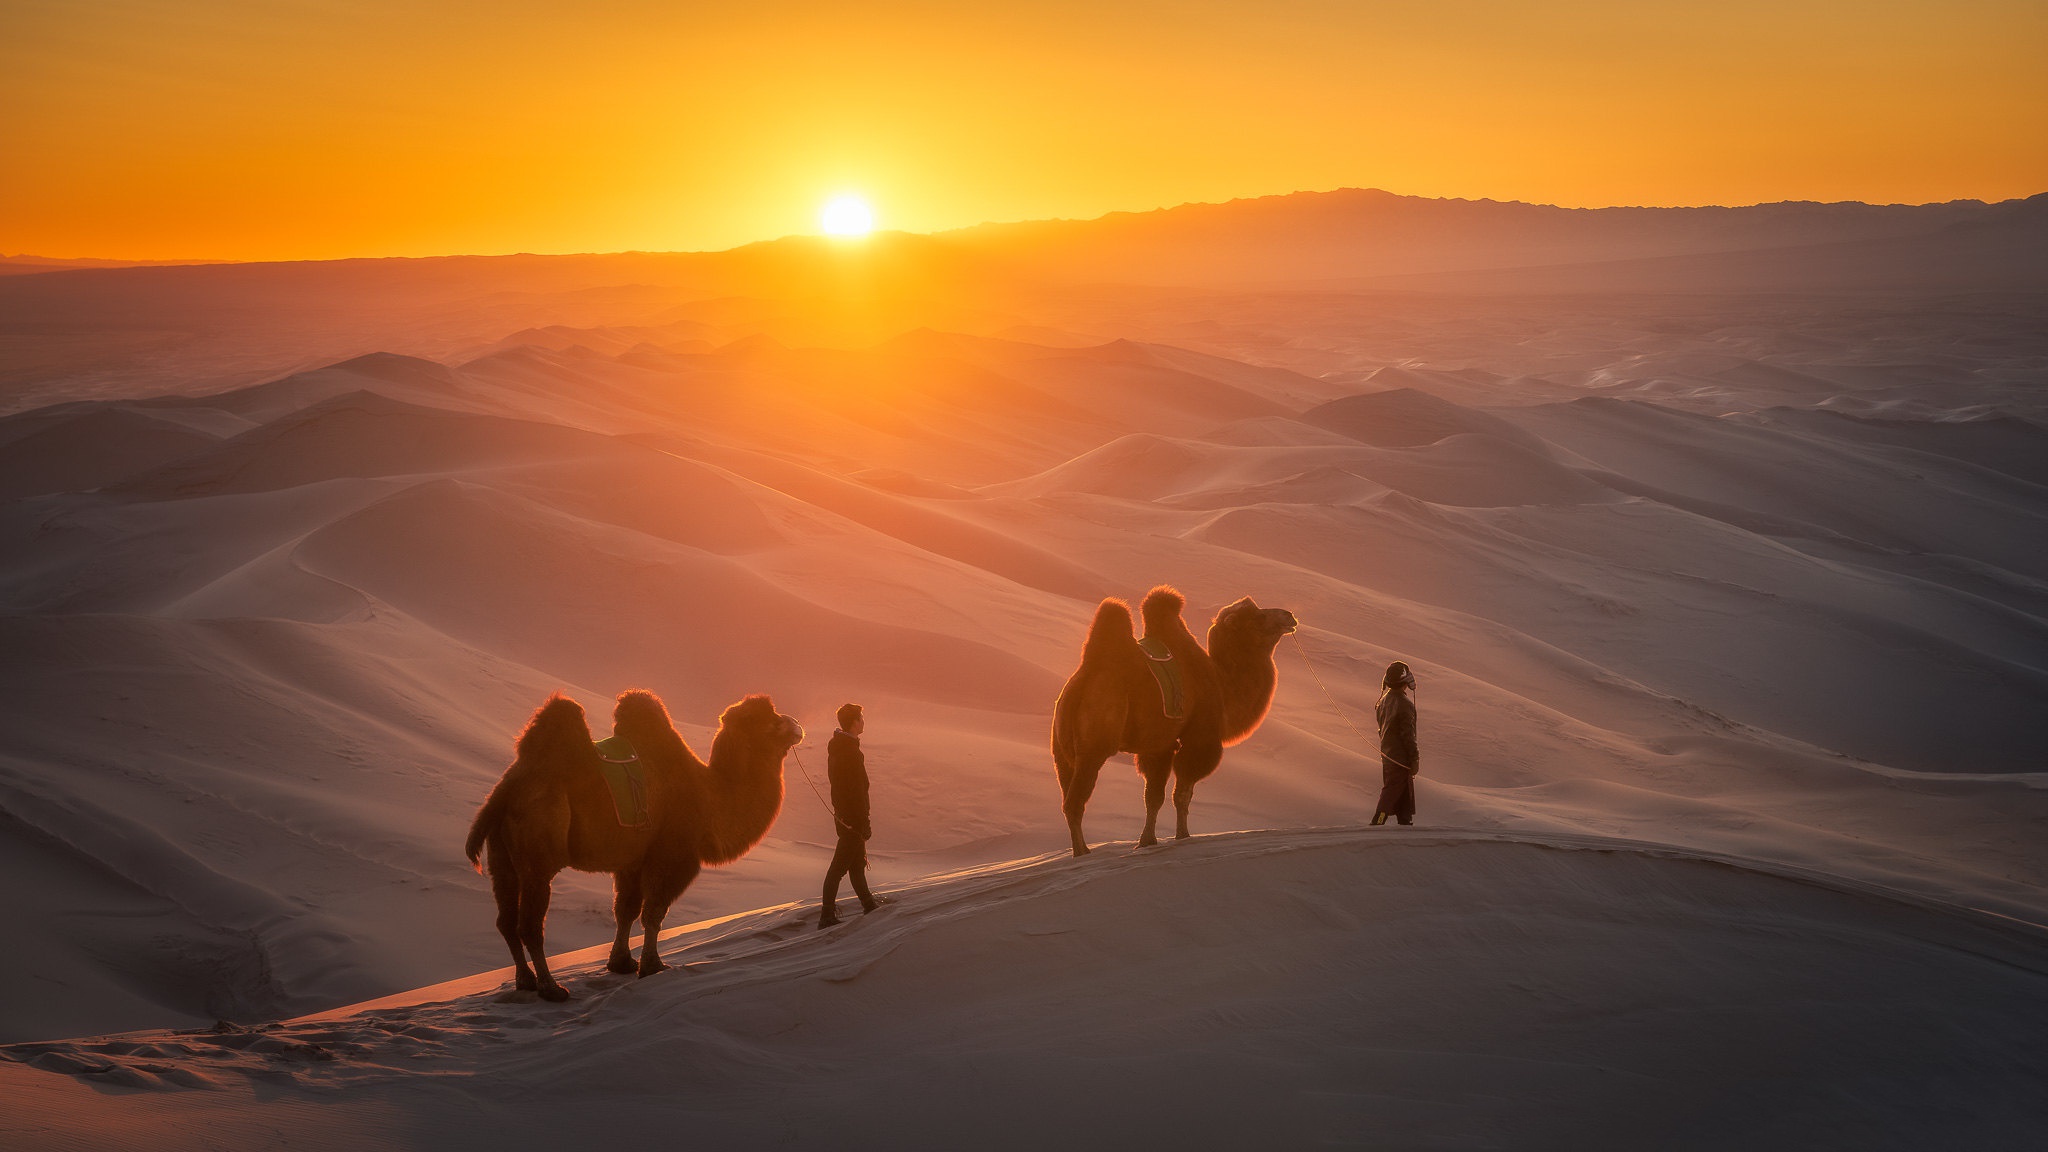 Караван рядом. Бедуин на верблюде. Караван Мекка пустыня. Верблюд в пустыне. Караван в пустыне.